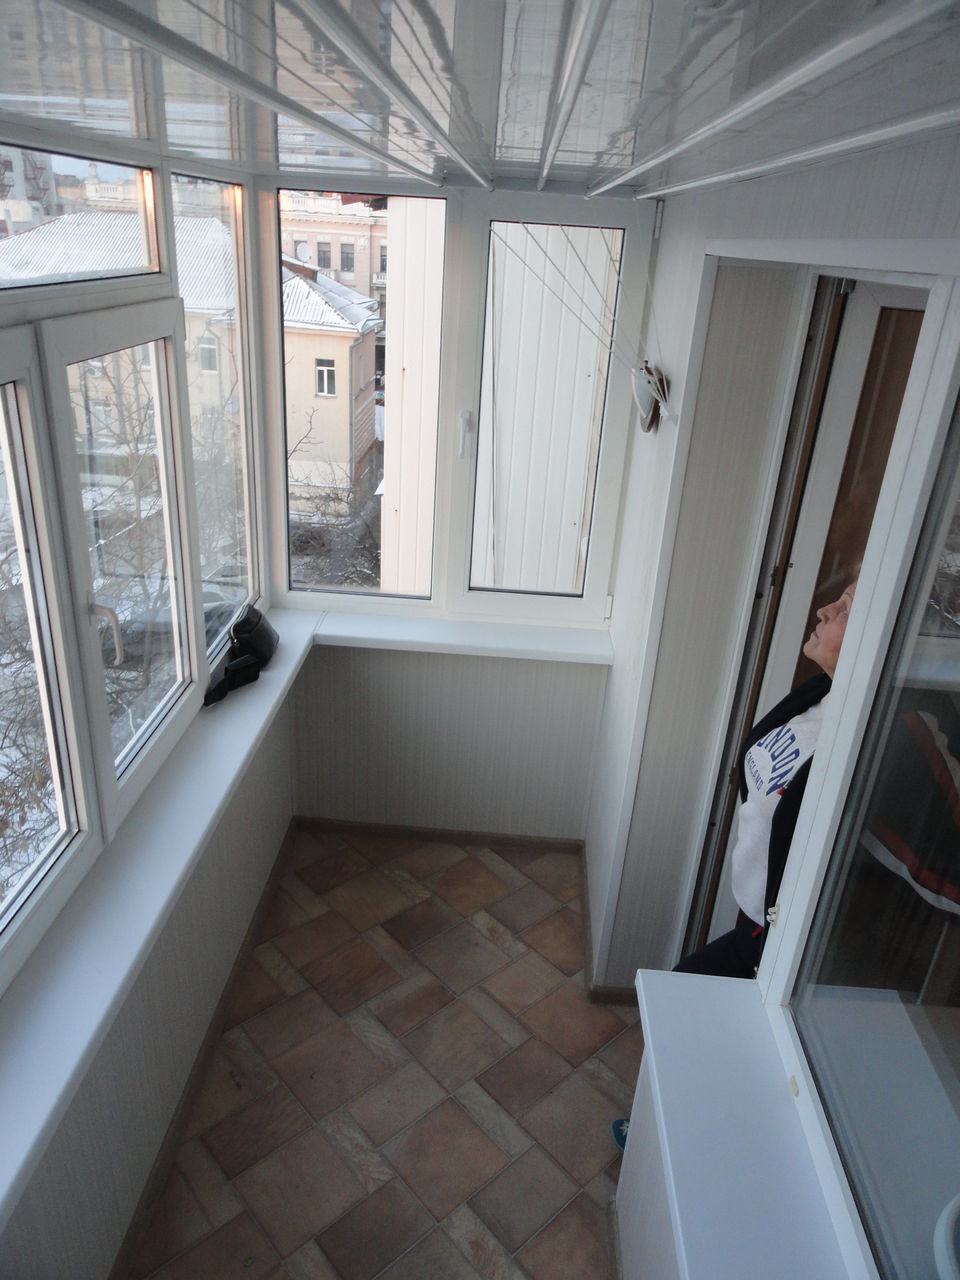 Фото внутренняя отделка балкона в хрущевке фото